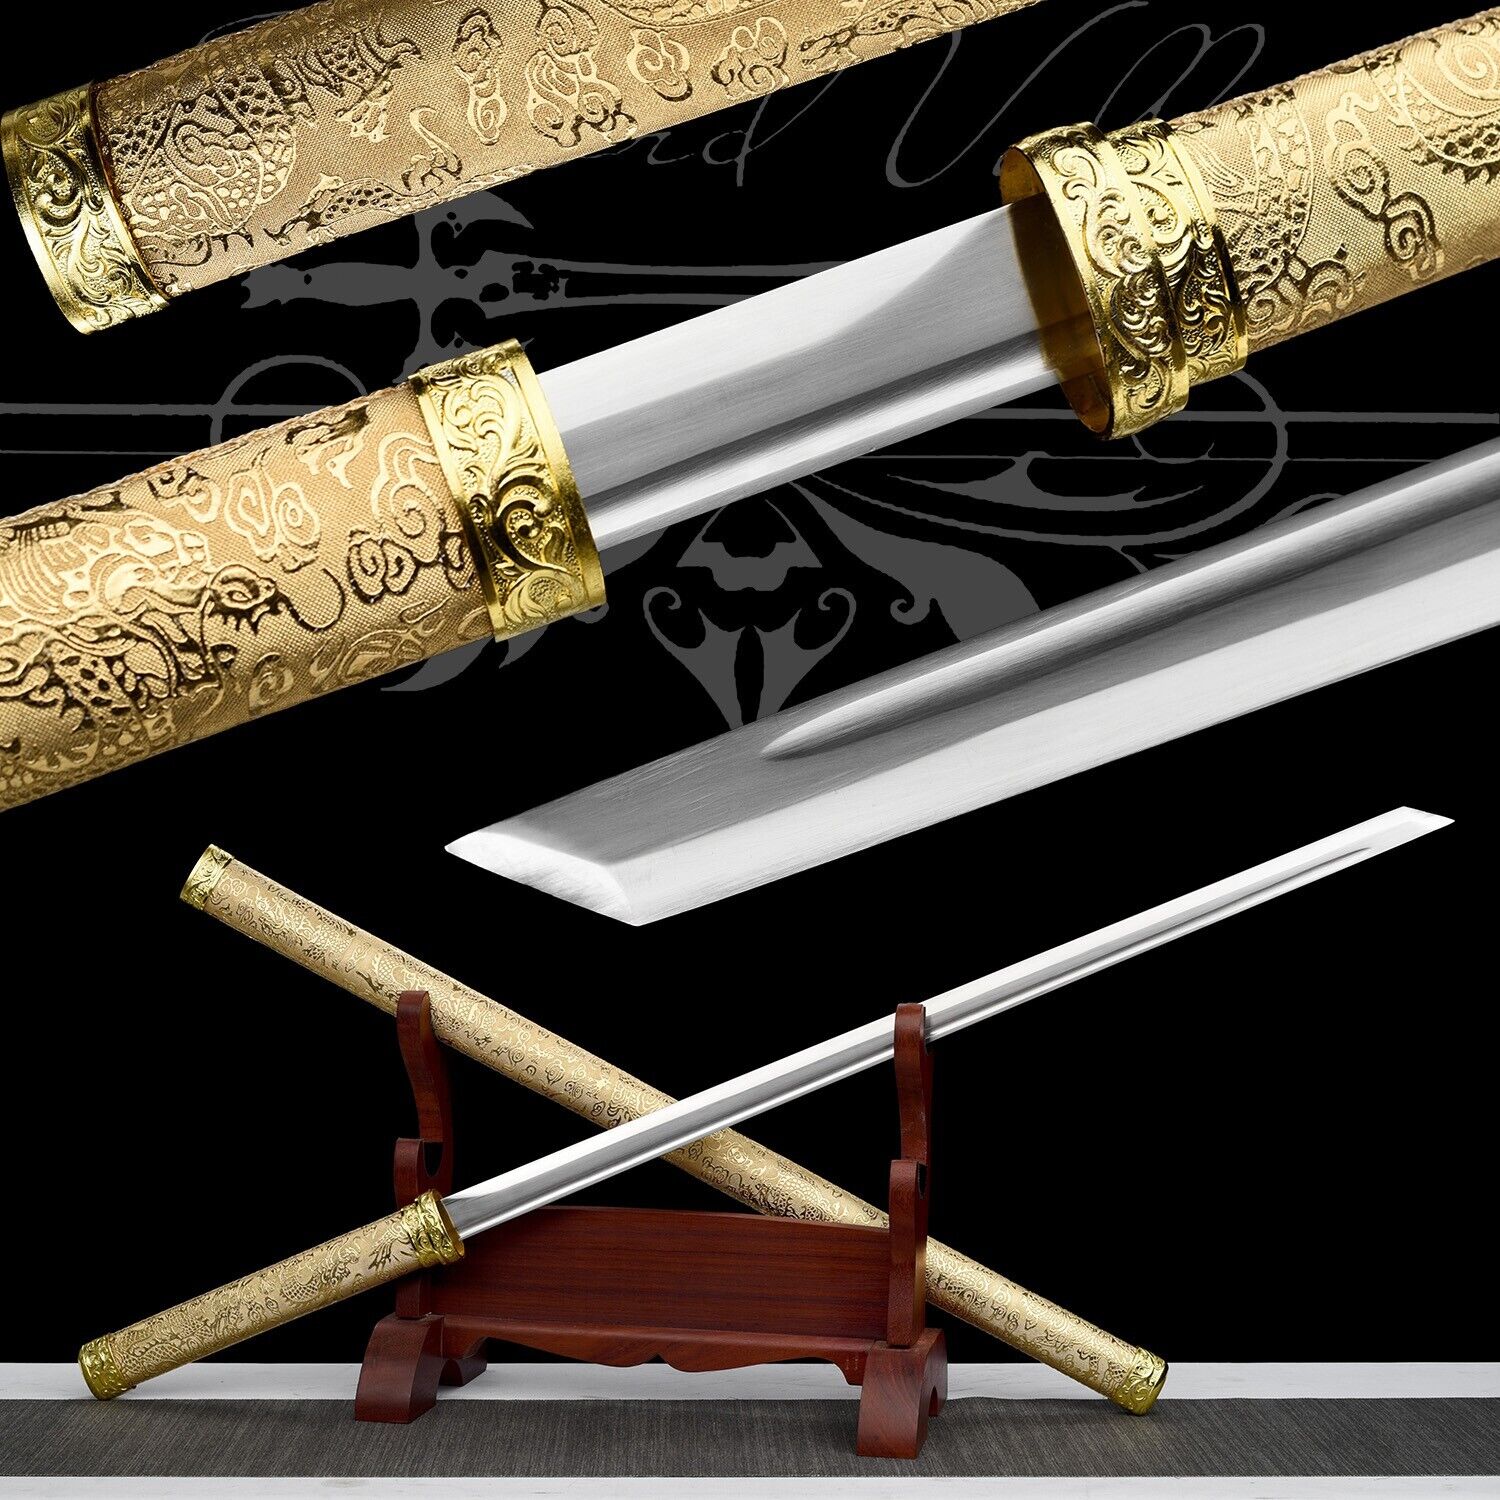 Handmade Katana/High manganese steel/Samurai Sword/Full Tang/Collectible/Sharpe